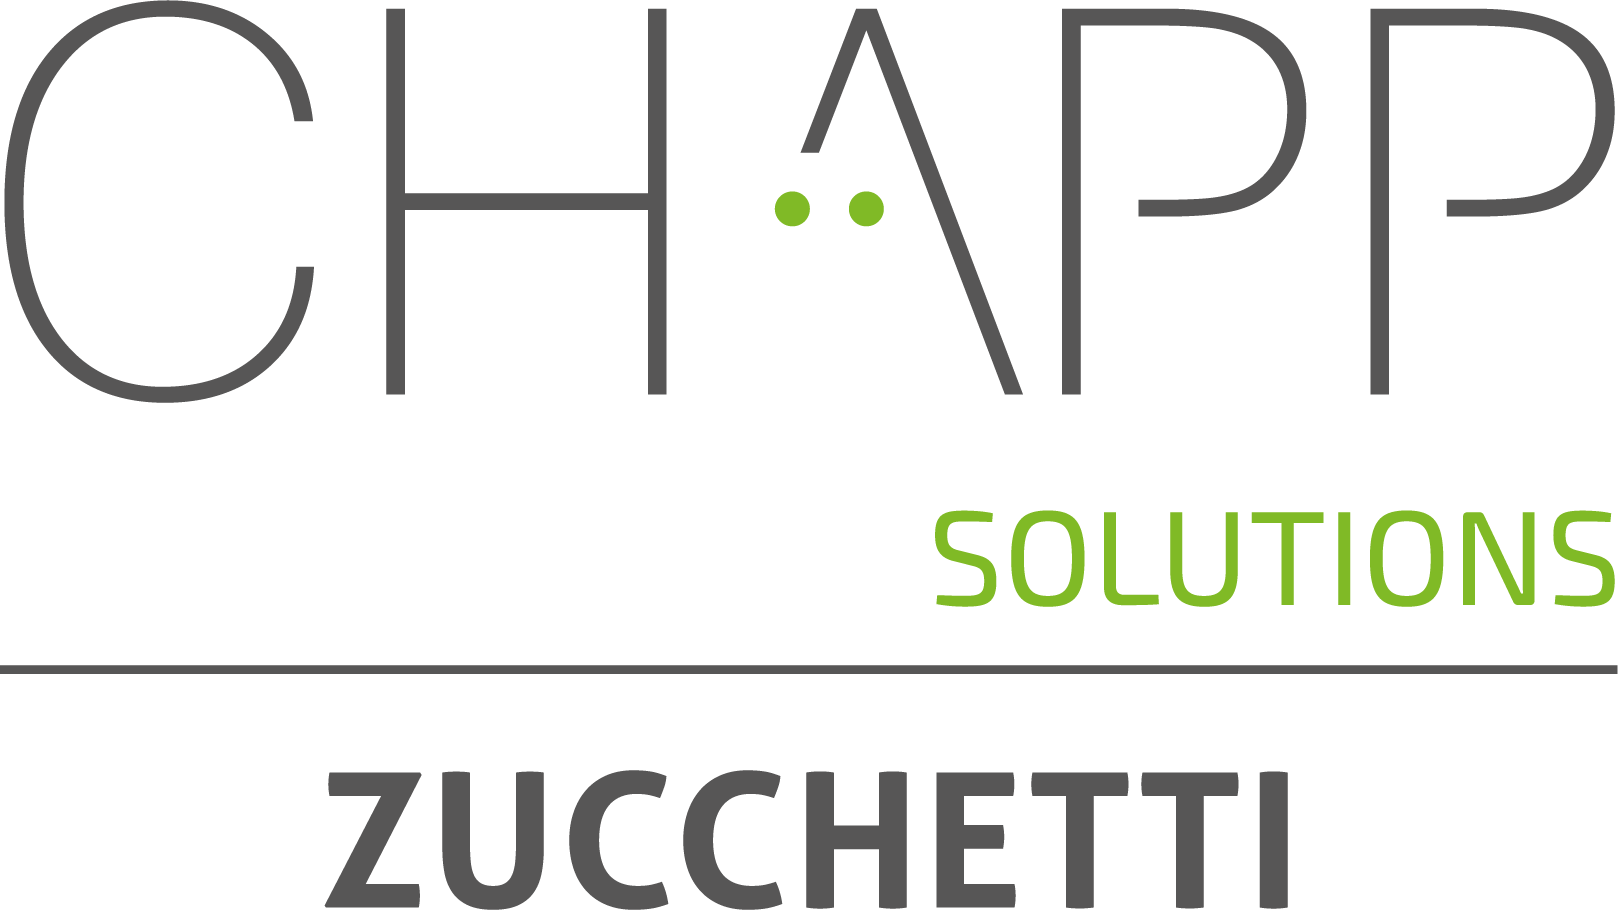 Chapp Solutions